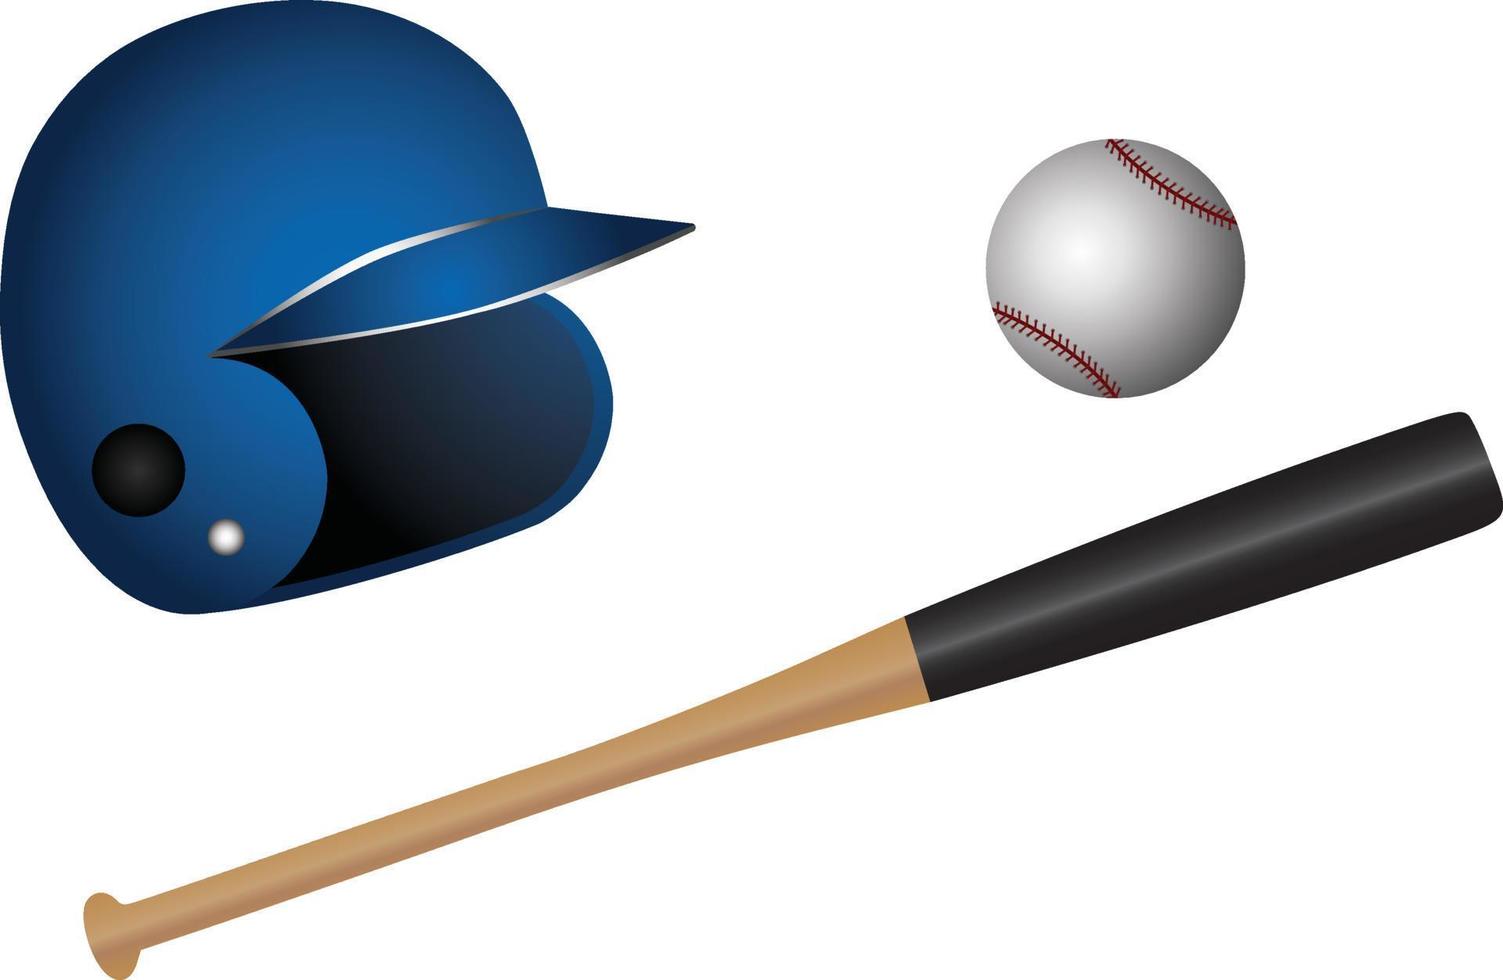 Vektorgrafik verschiedener Baseballausrüstungen, Baseballschläger, Ball und Helm. Baseballsportgeräte vektor